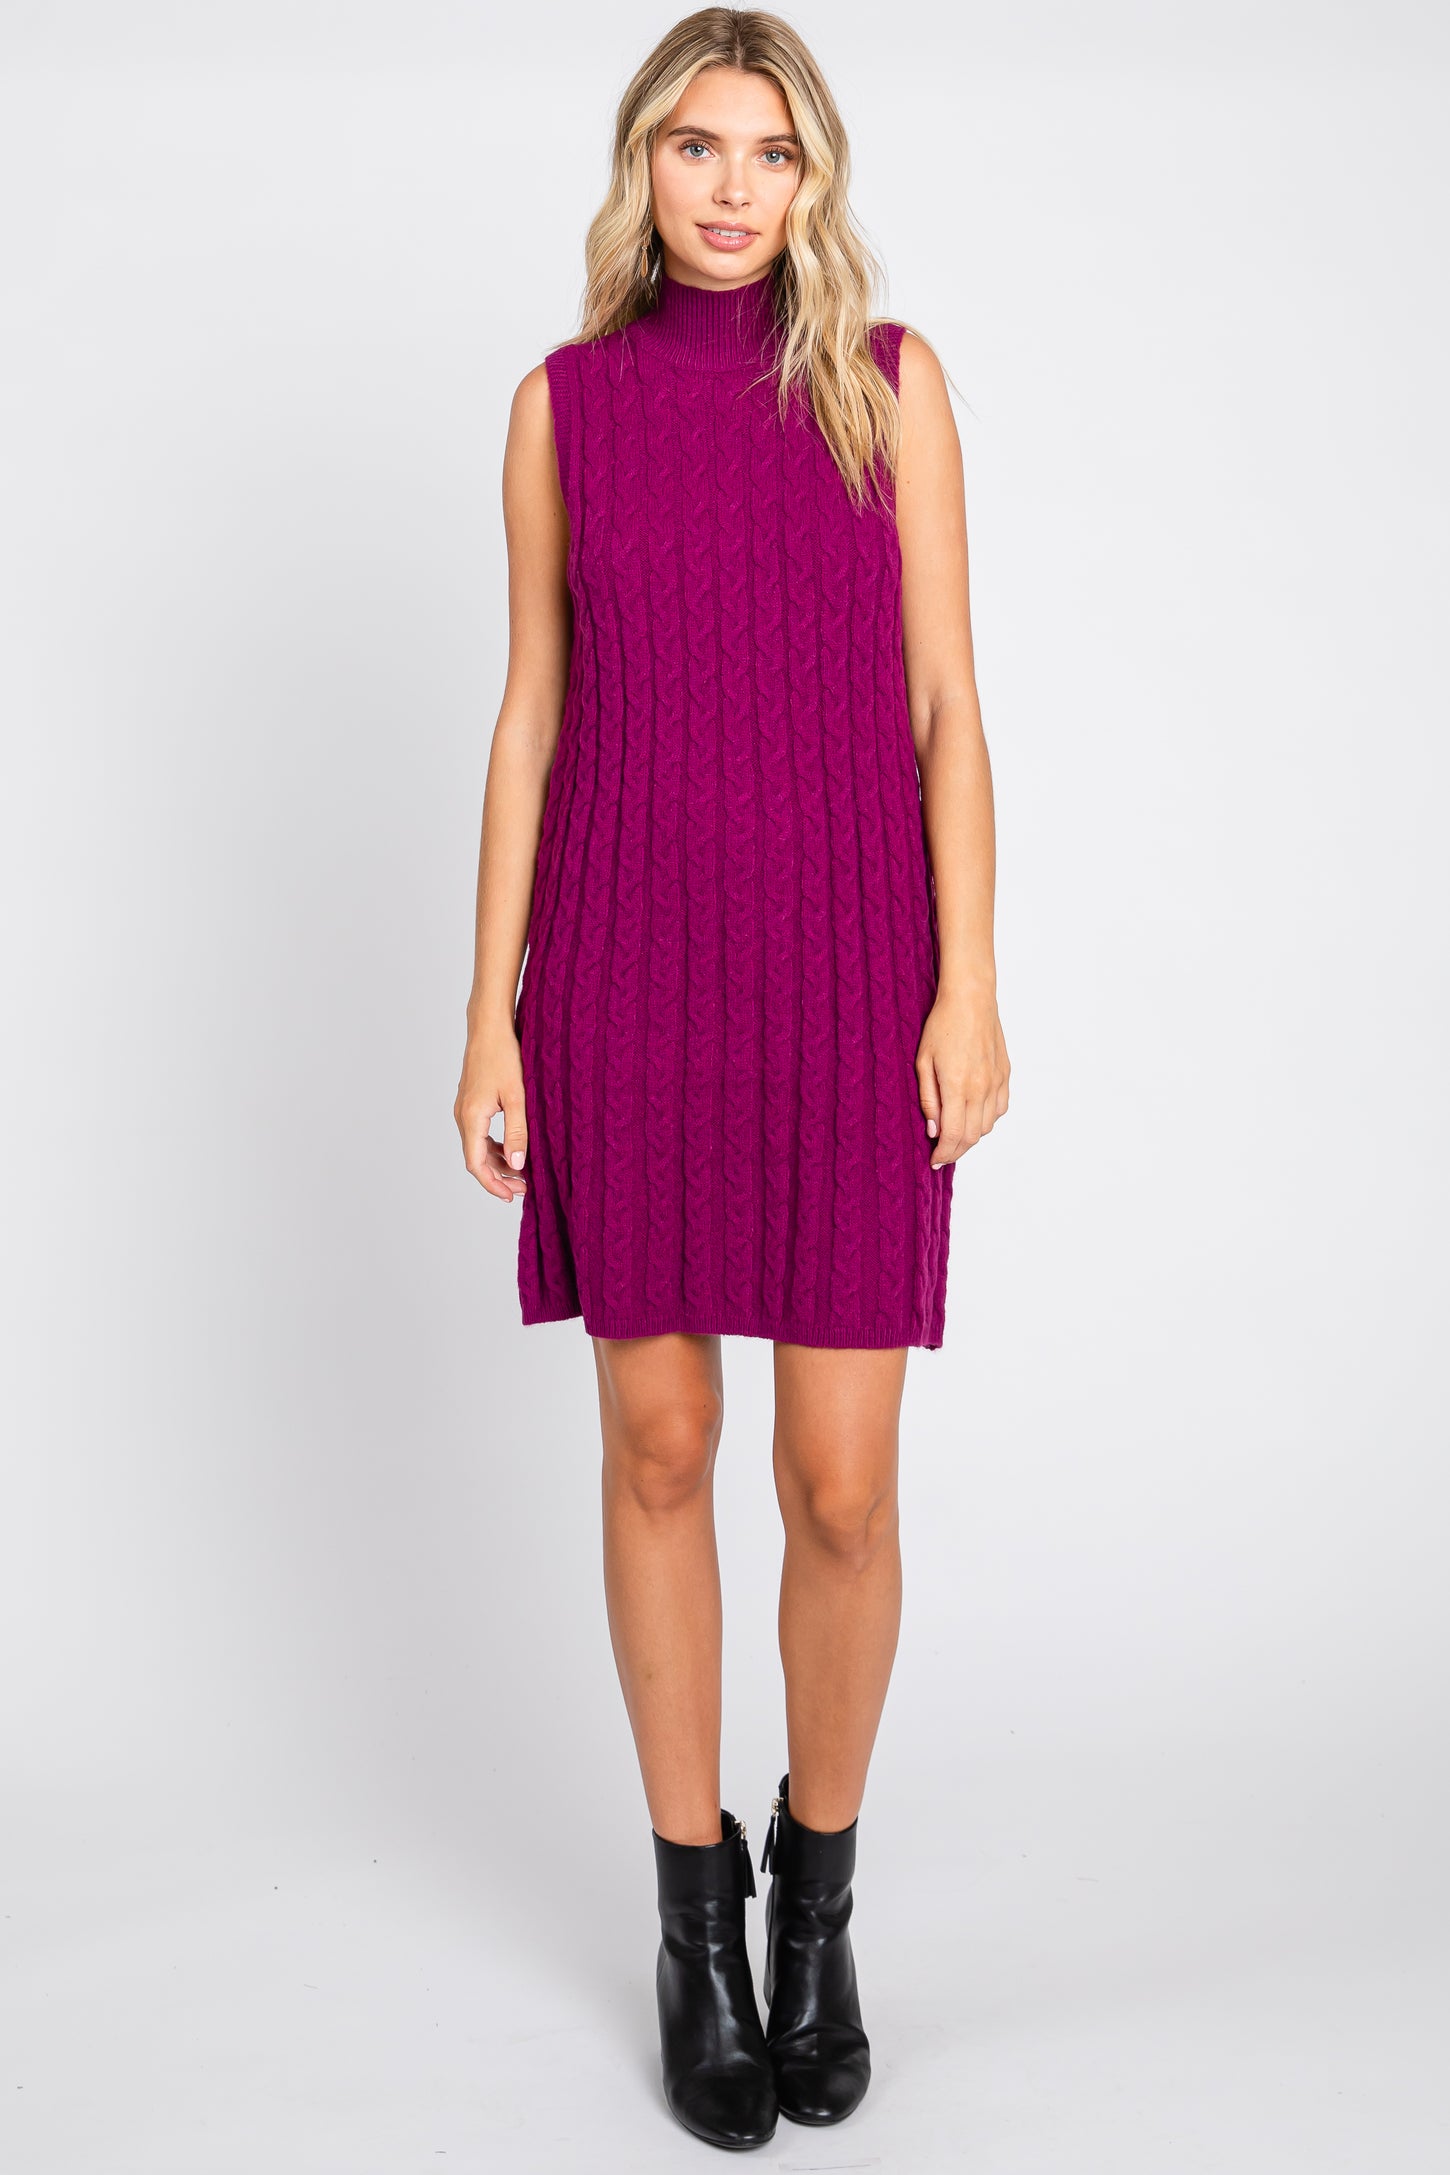 Plum Cable Knit Mini Sweater Dress